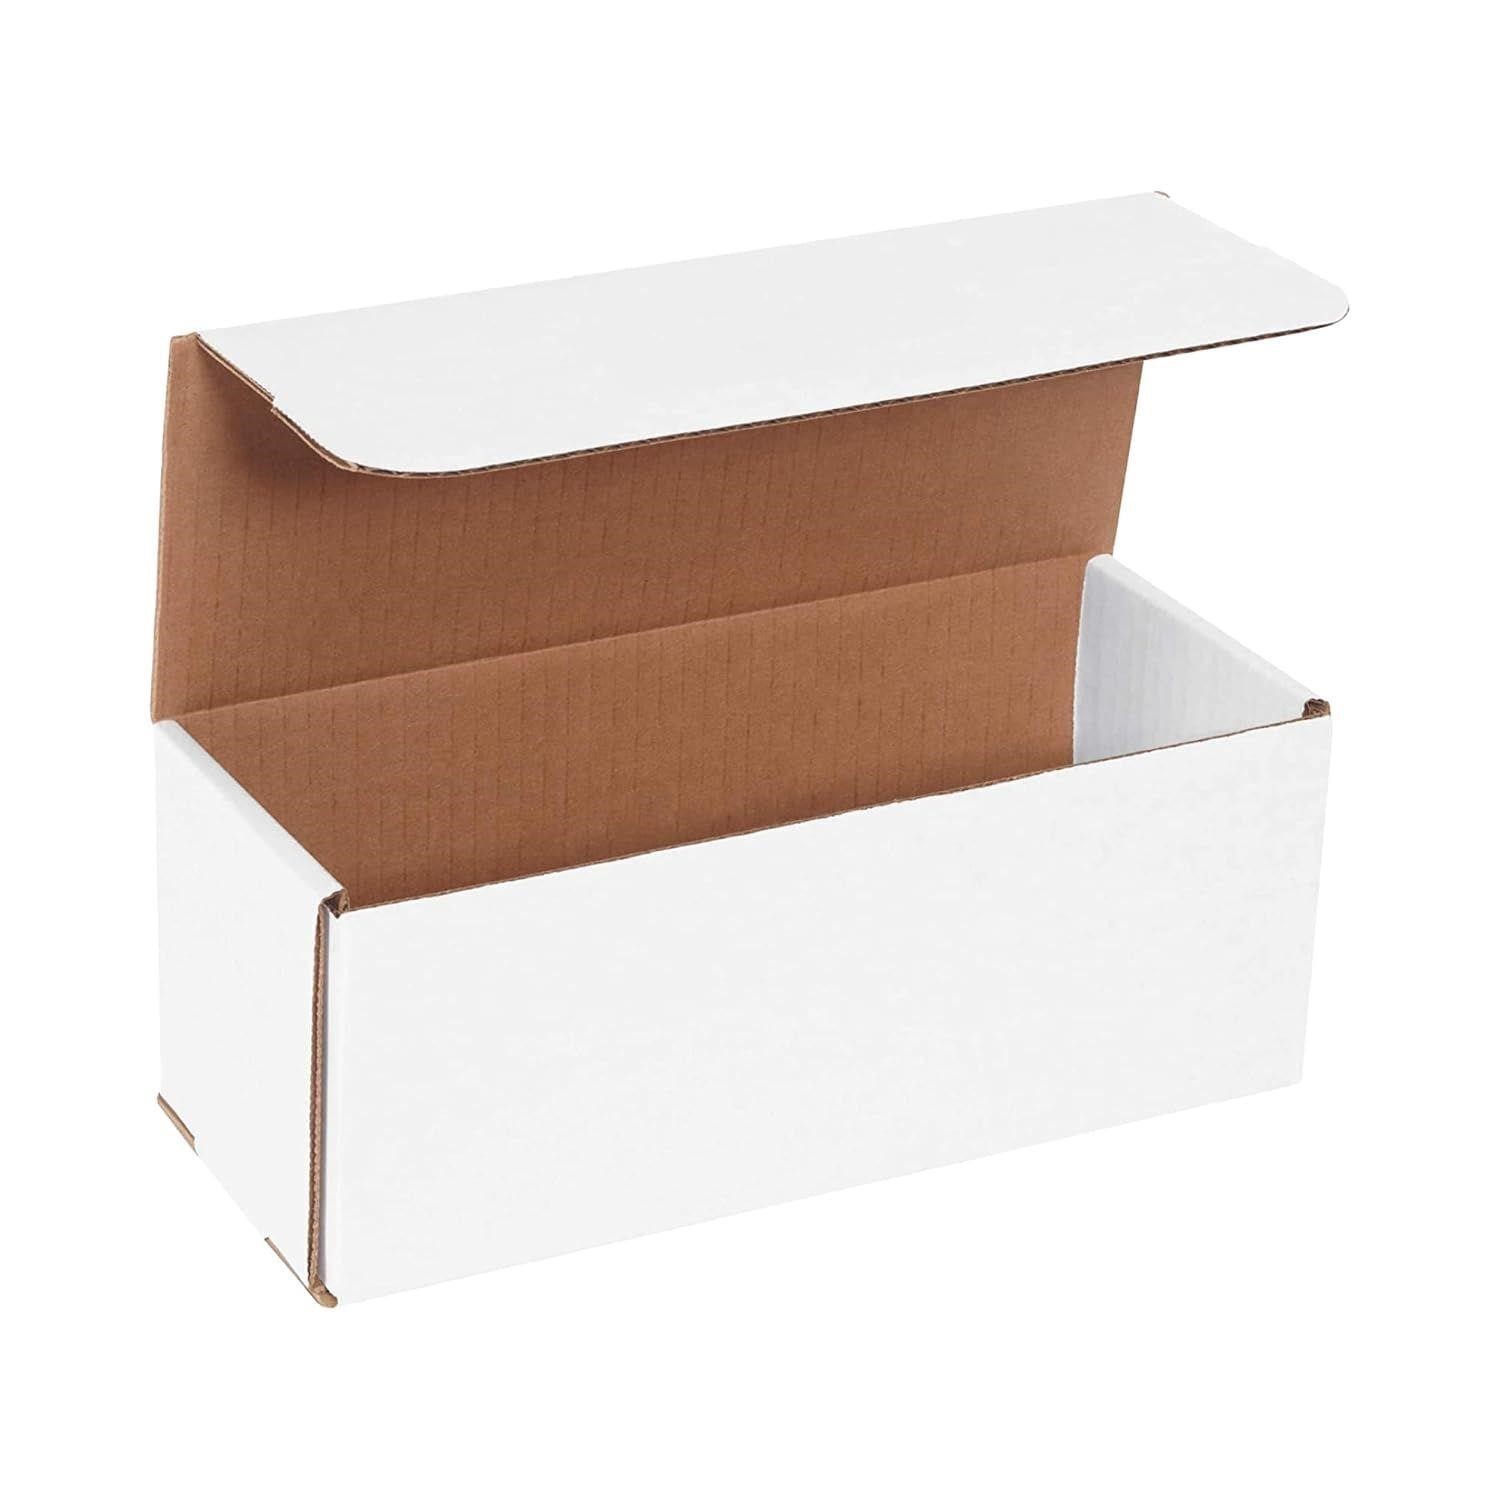 BOX USA Shipping Boxes Small